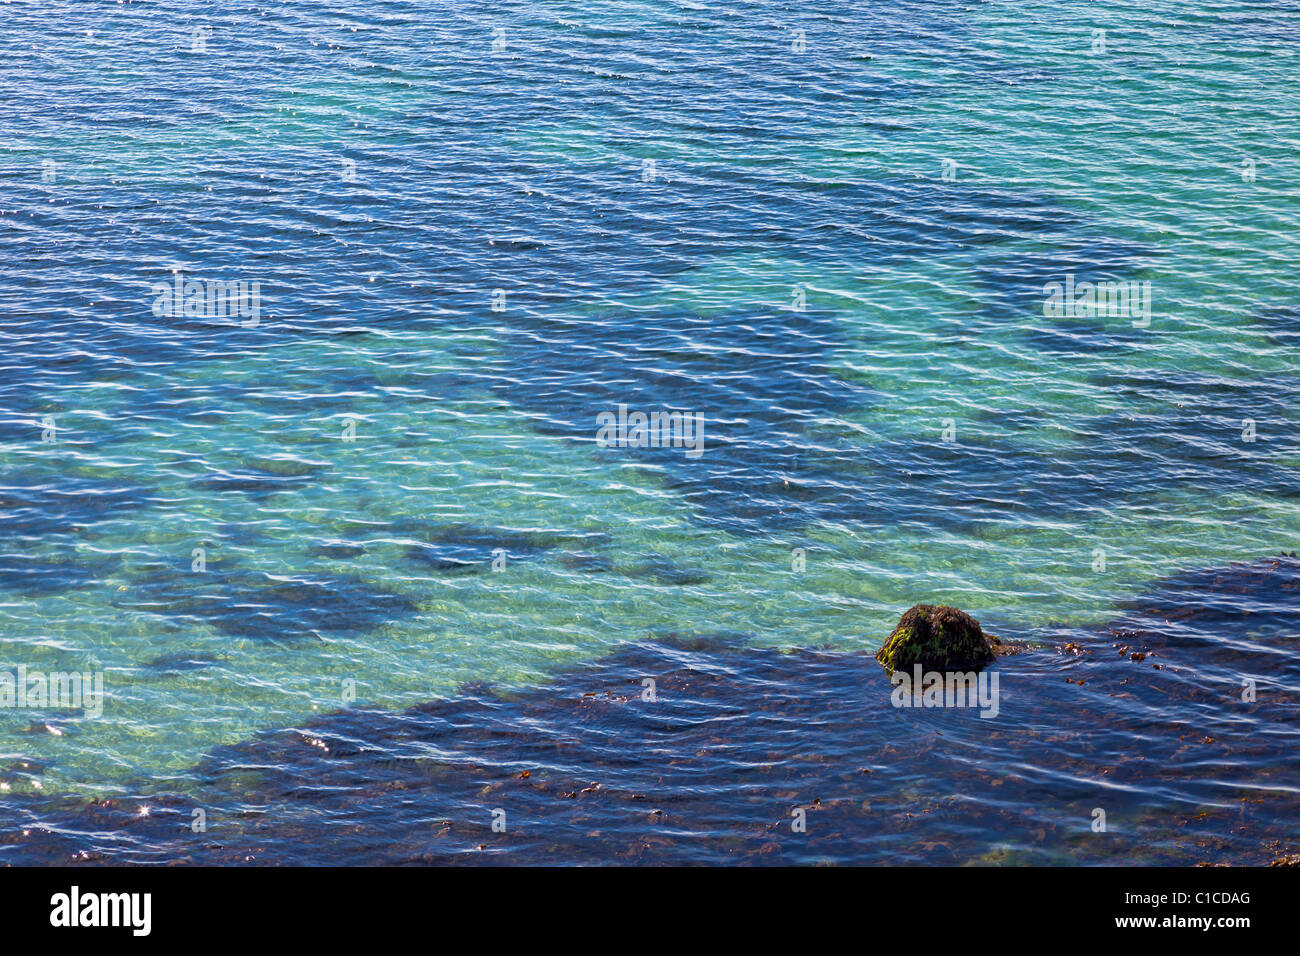 Les ondulations de l'eau de mer peu profonde couvrant les algues, France, Europe Banque D'Images